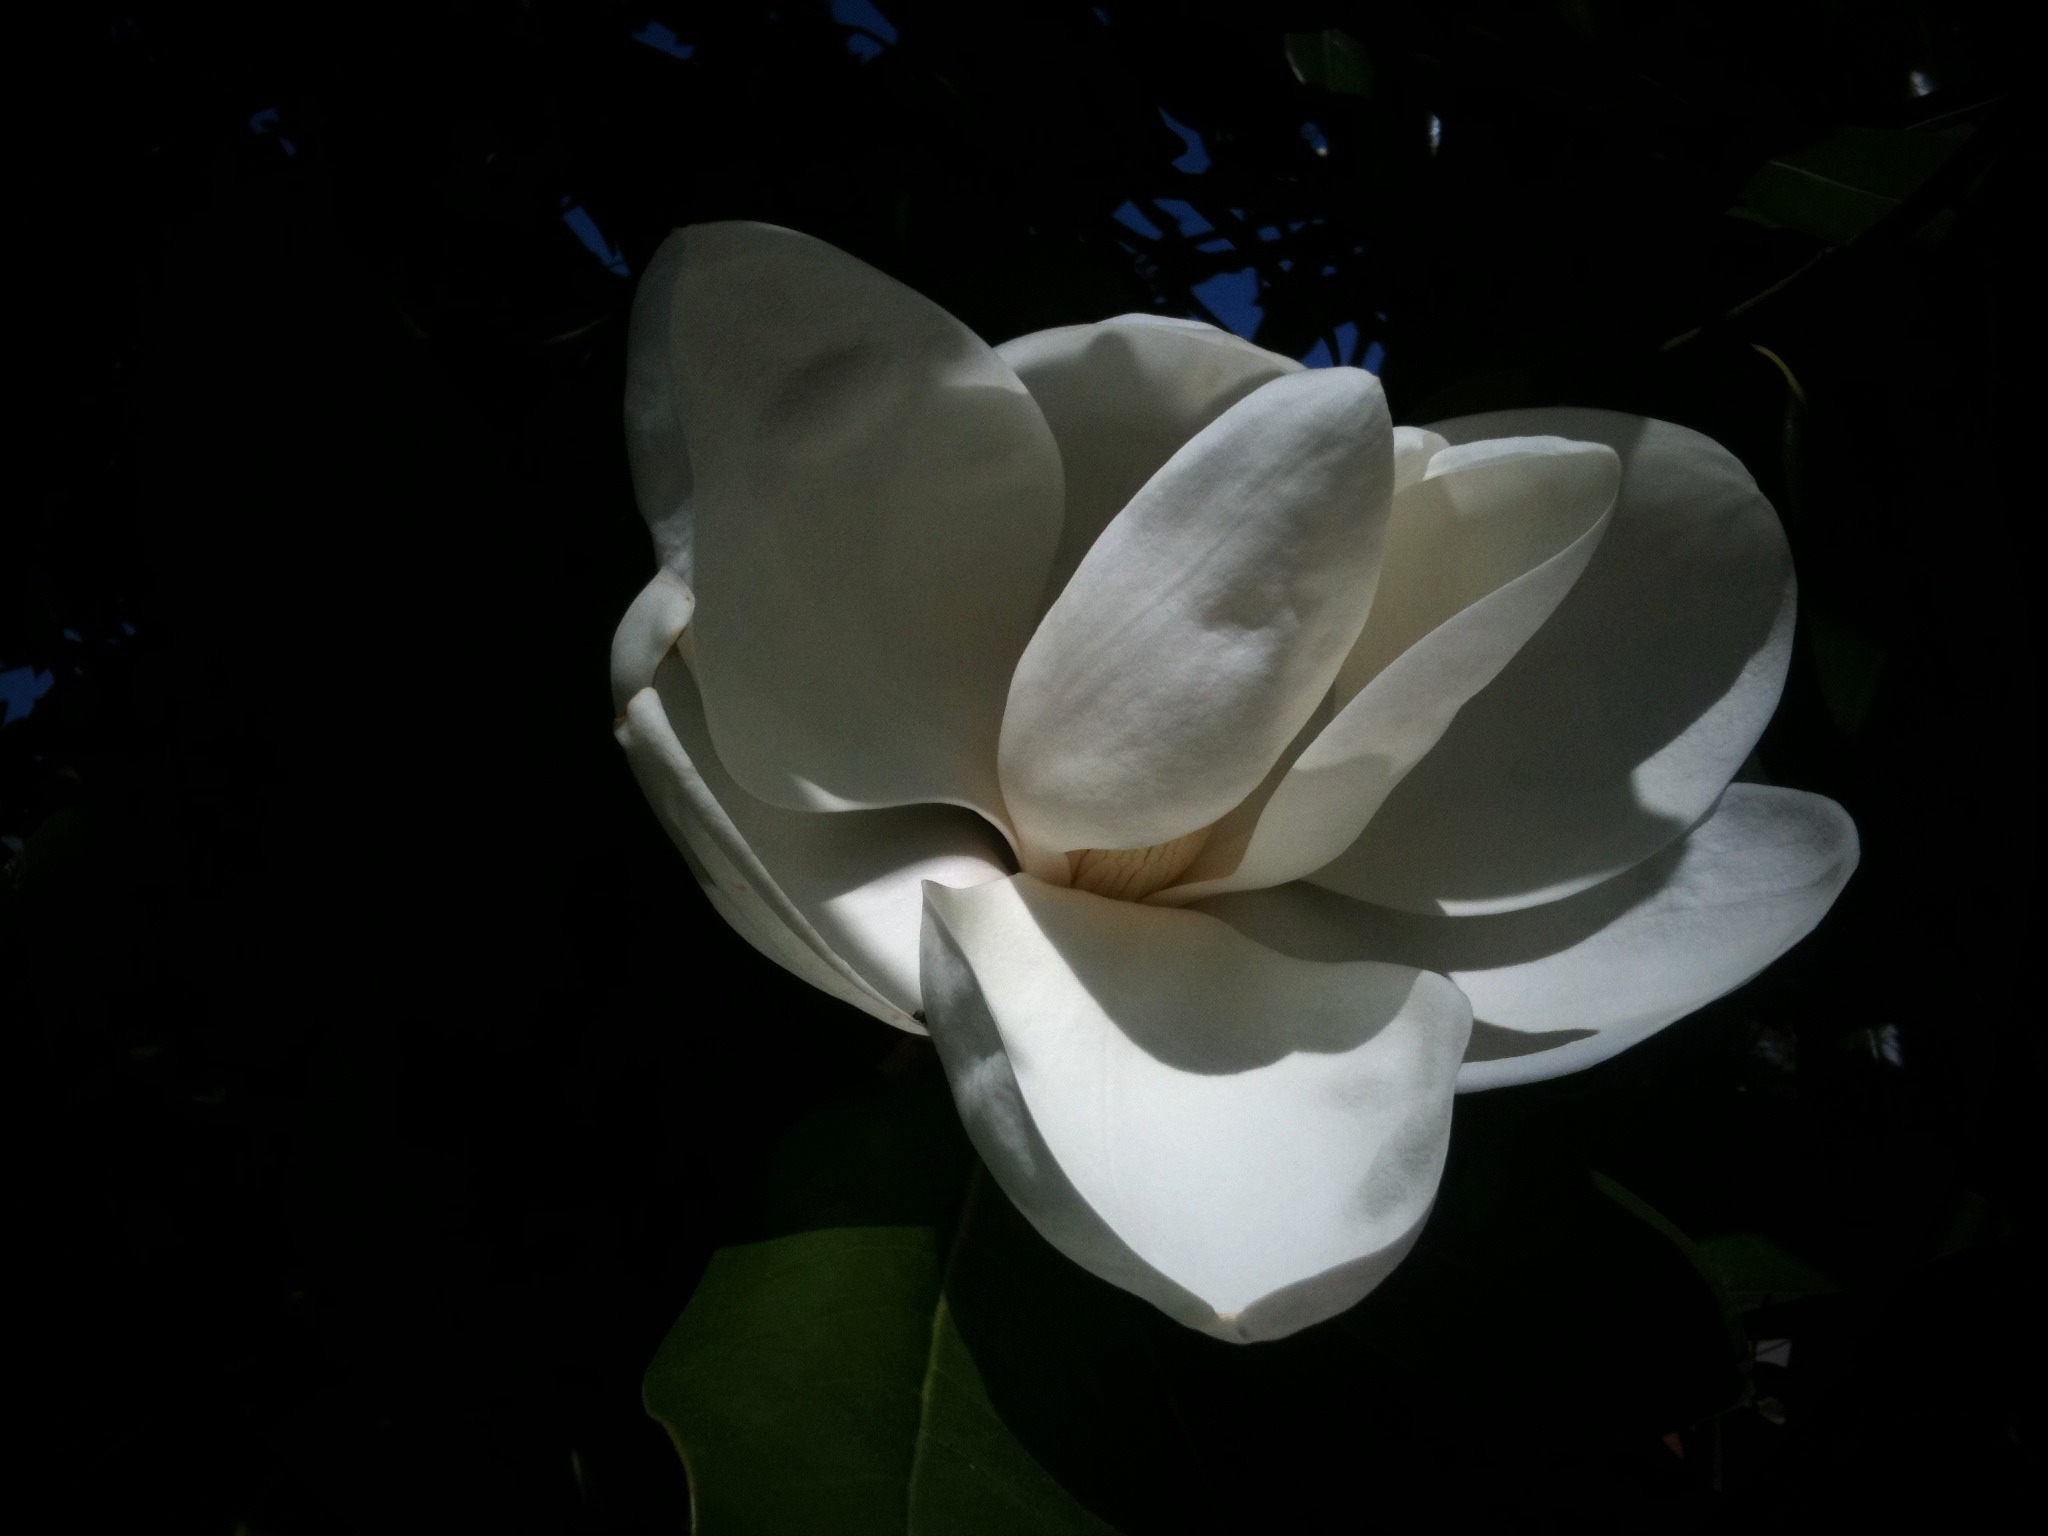 June bloom - Sweet magnolia on campus